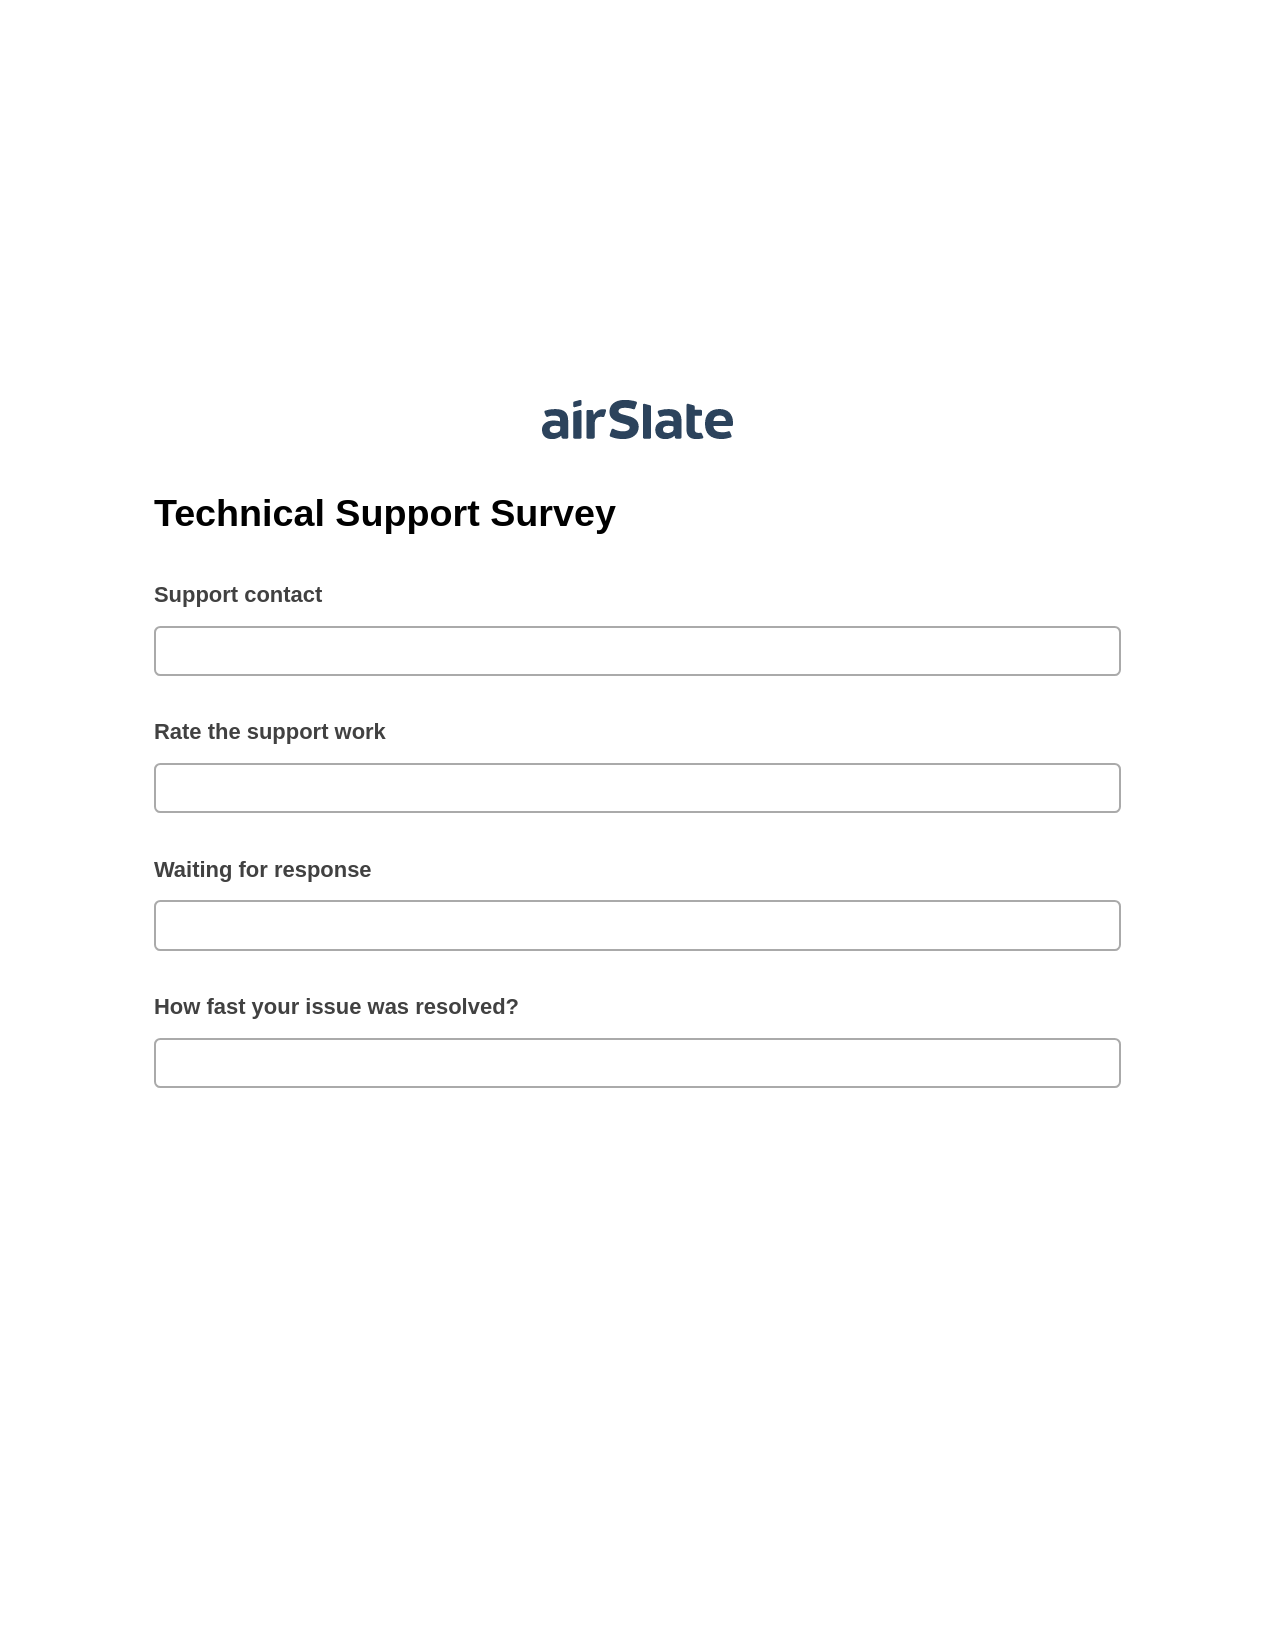 Technical Support Survey Pre-fill from CSV File Bot, Update Salesforce Records Bot, Slack Notification Postfinish Bot